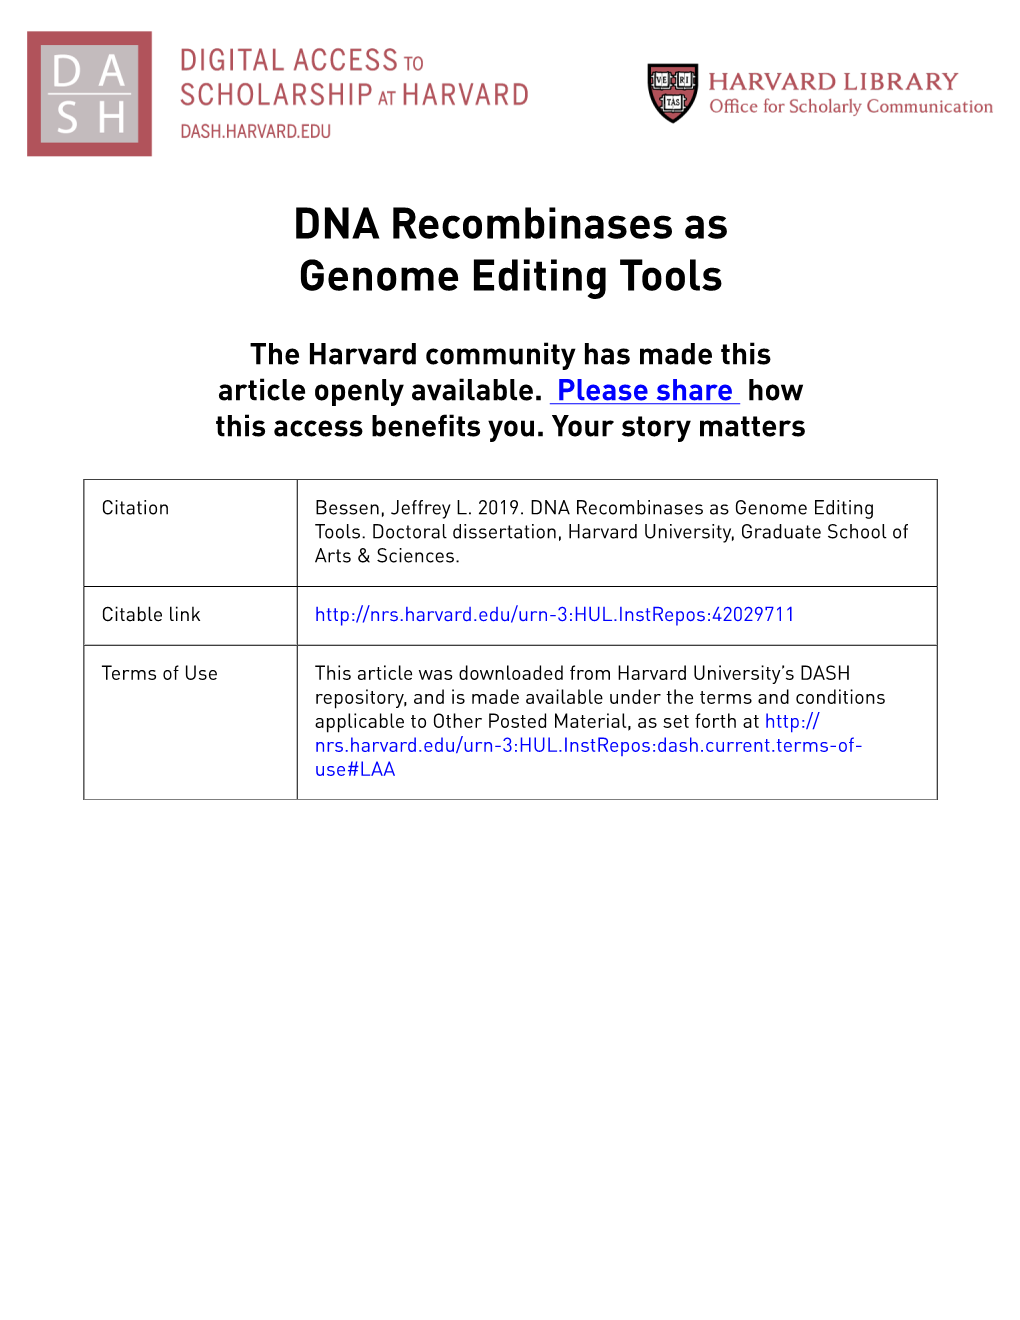 DNA Recombinases As Genome Editing Tools